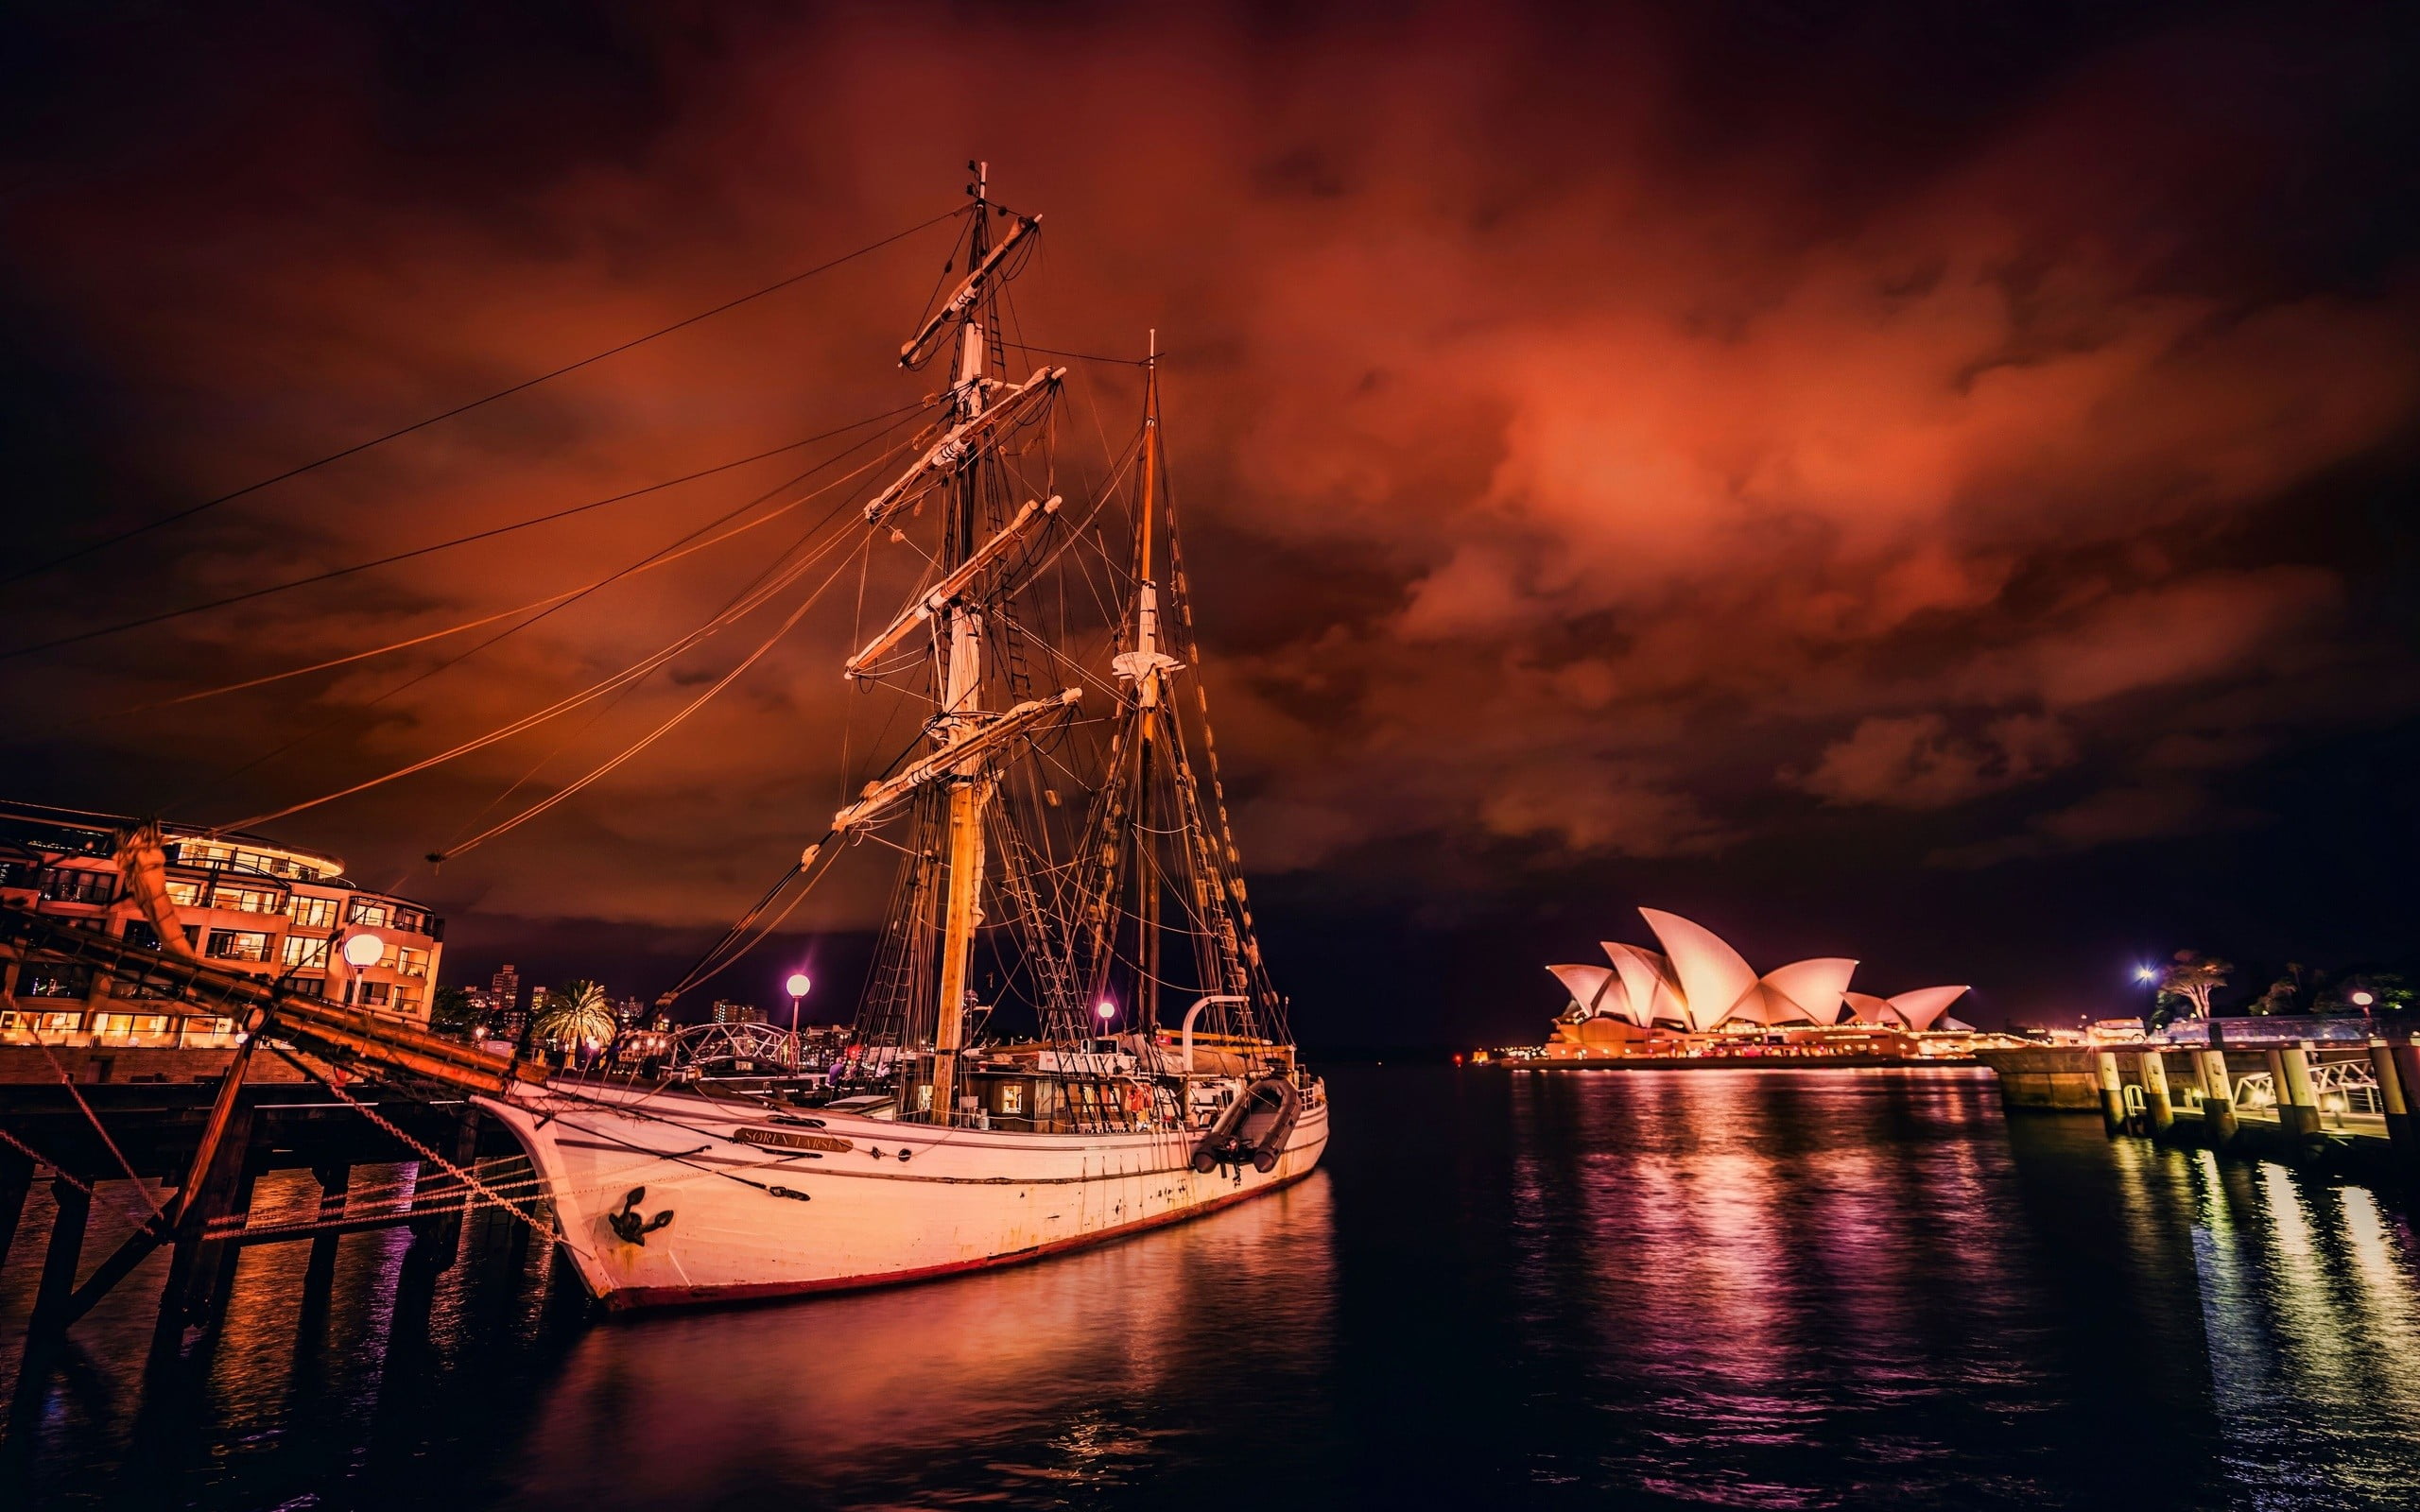 Sydney Opera House, Australia, Sydney, Sydney Opera House, sailing ship, ship